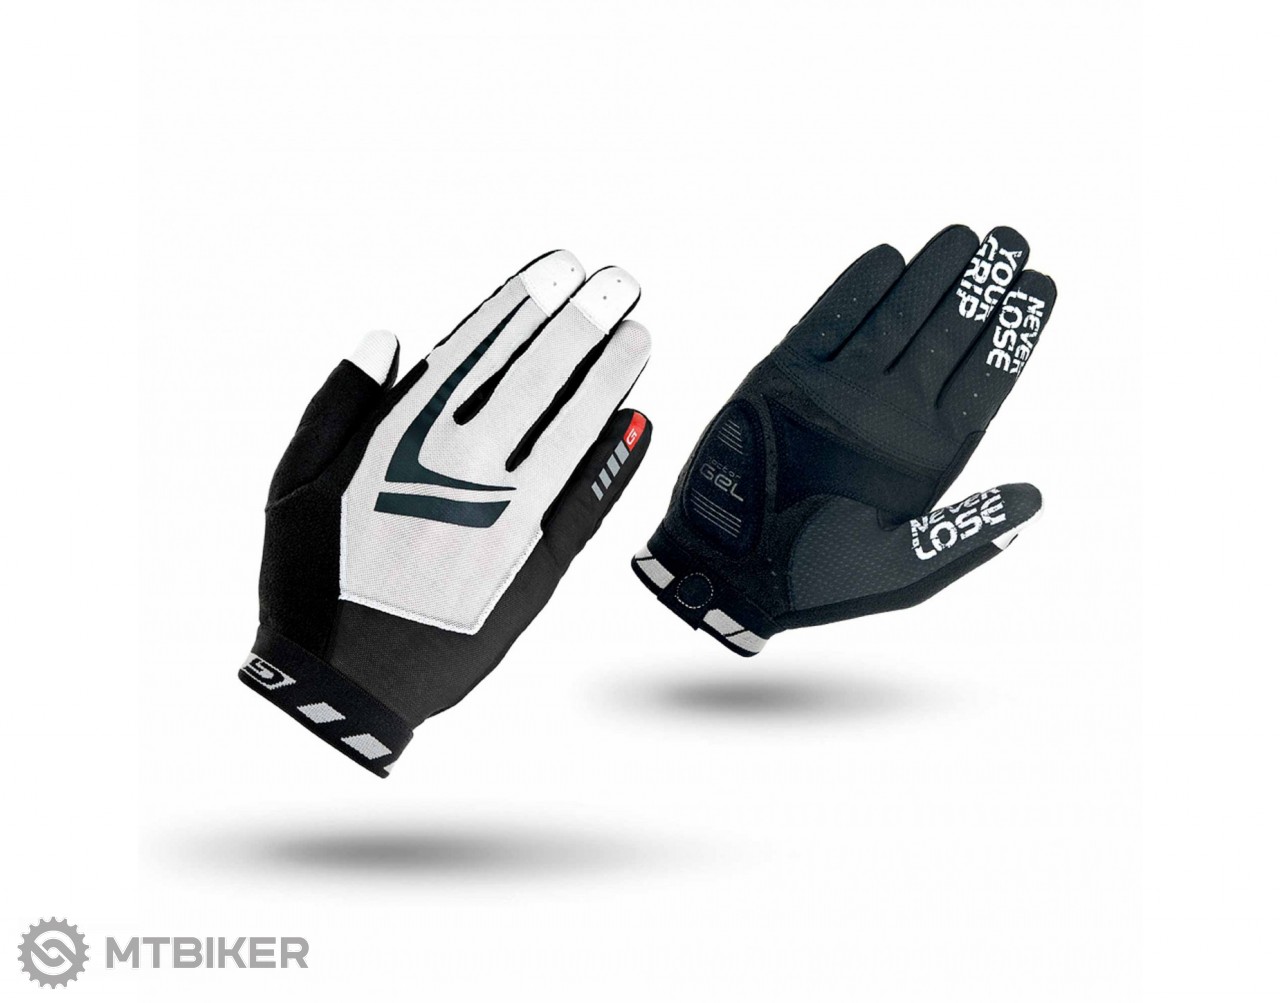 Grip Grab Racing Handschuhe, schwarz/weiß